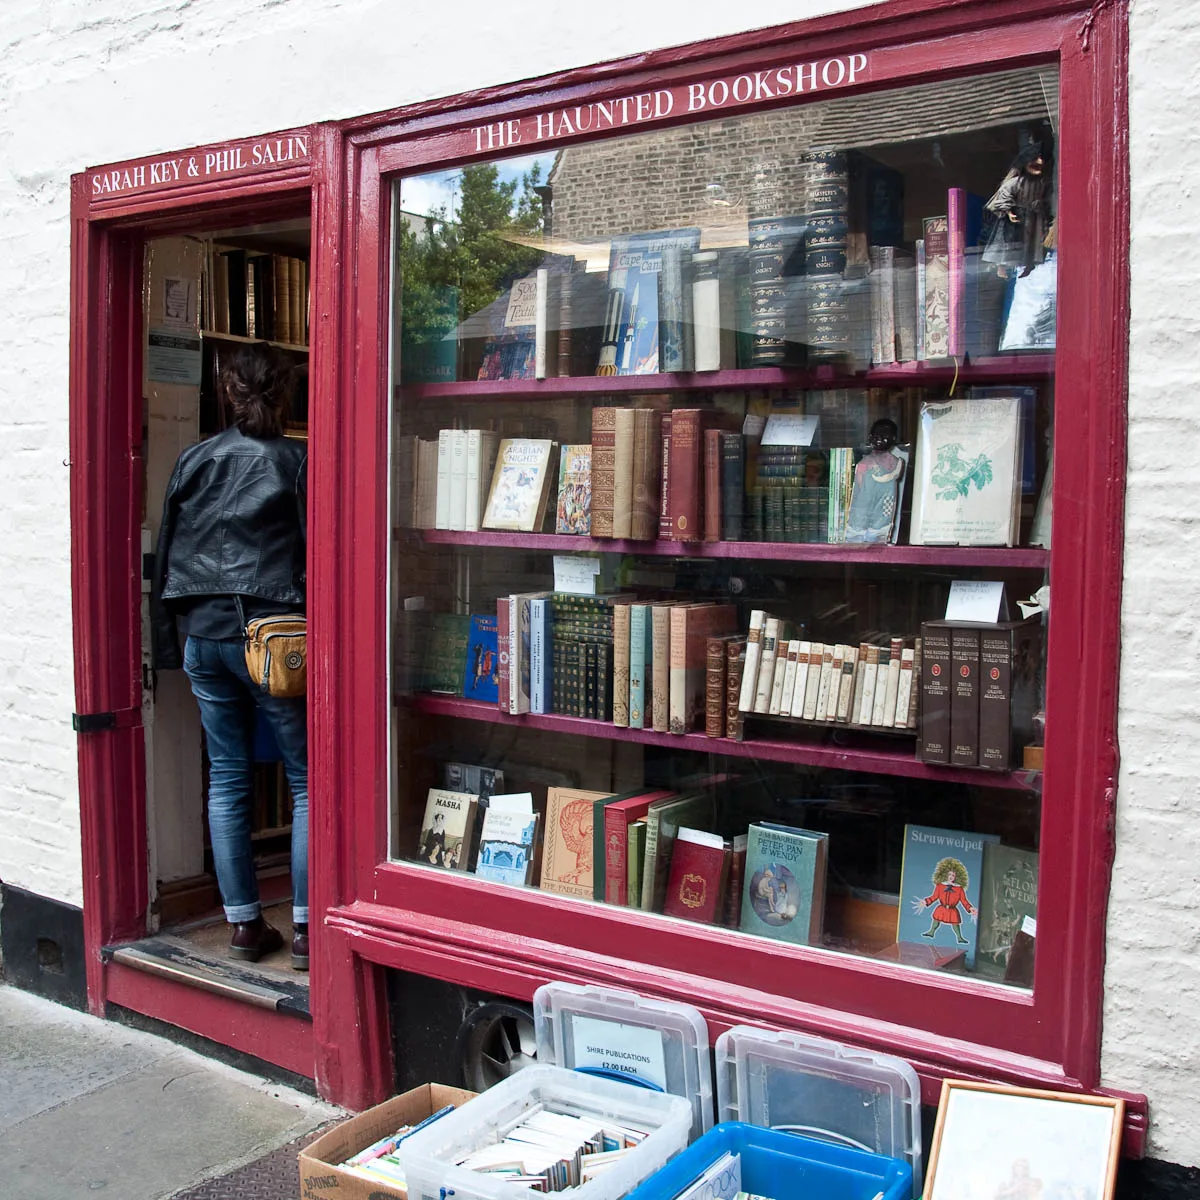 The Haunted Bookshop, Cambridge, England - www.rossiwrites.com